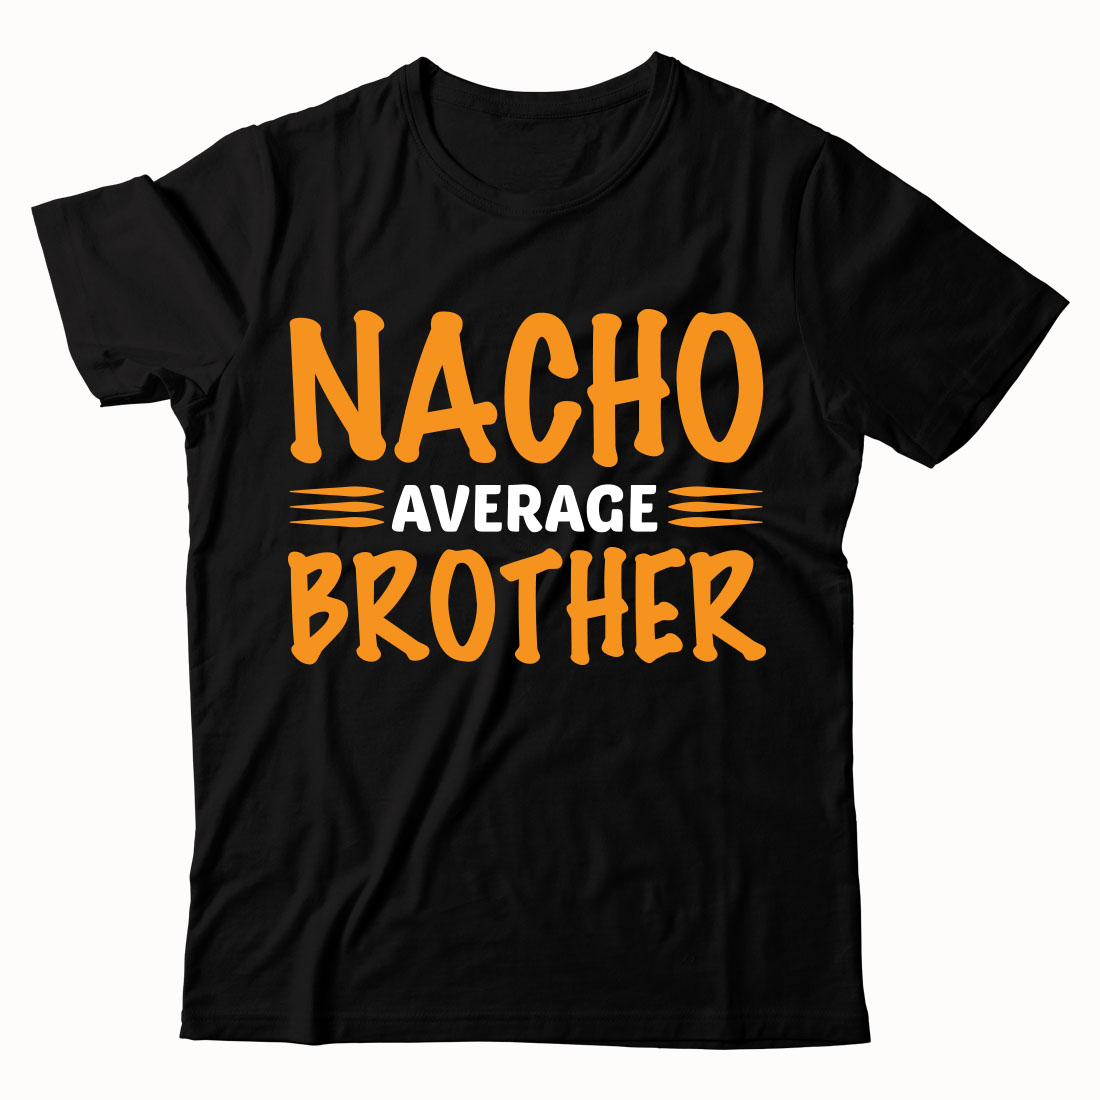 Black shirt that says nacho average brother.